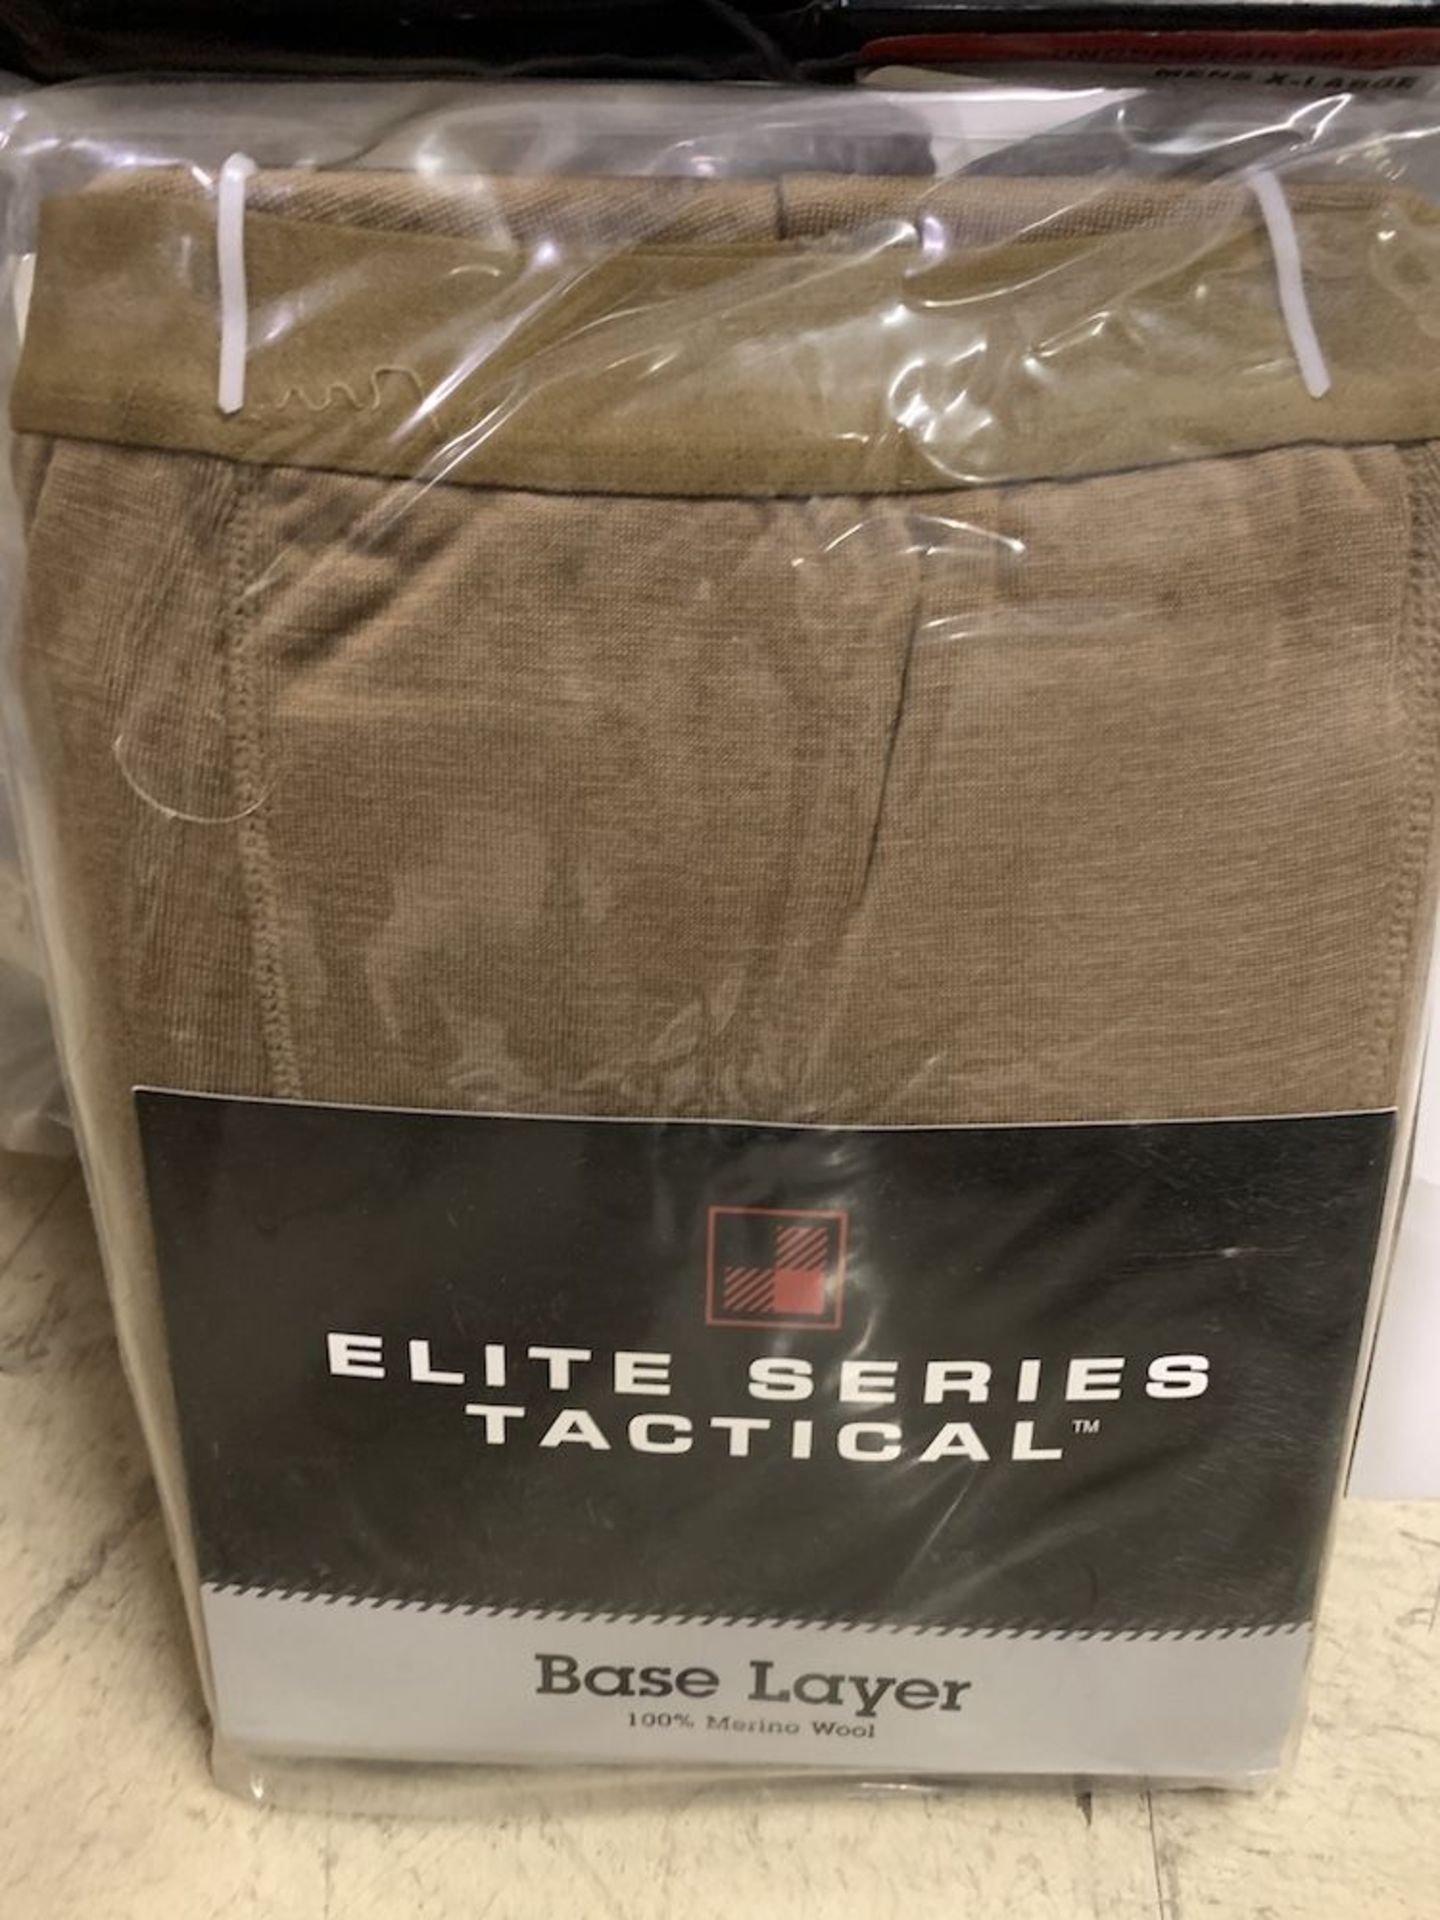 55 Pairs of Elite Series Tactical Base Layer Pants, New in Packaging, Brown, Merino Wool, Retail - Image 4 of 5